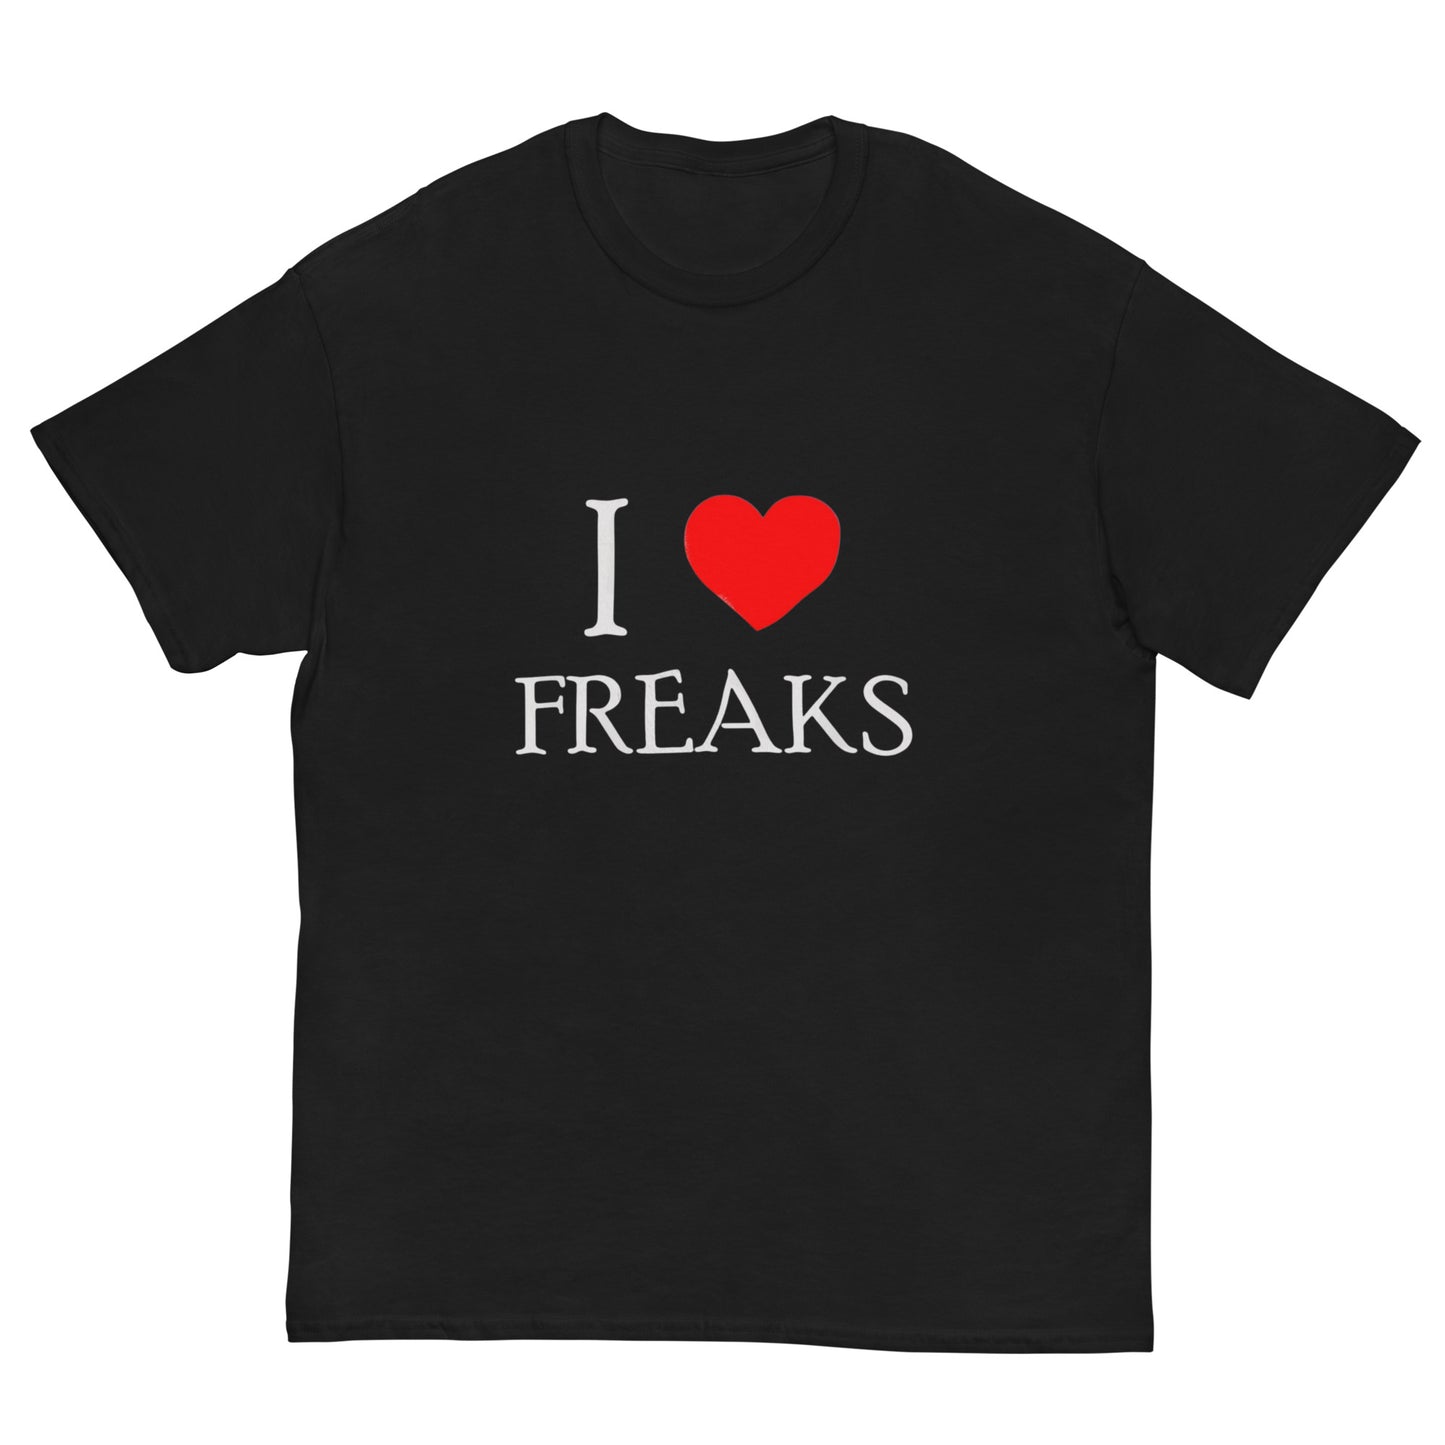 I Love Freaks Tee Black